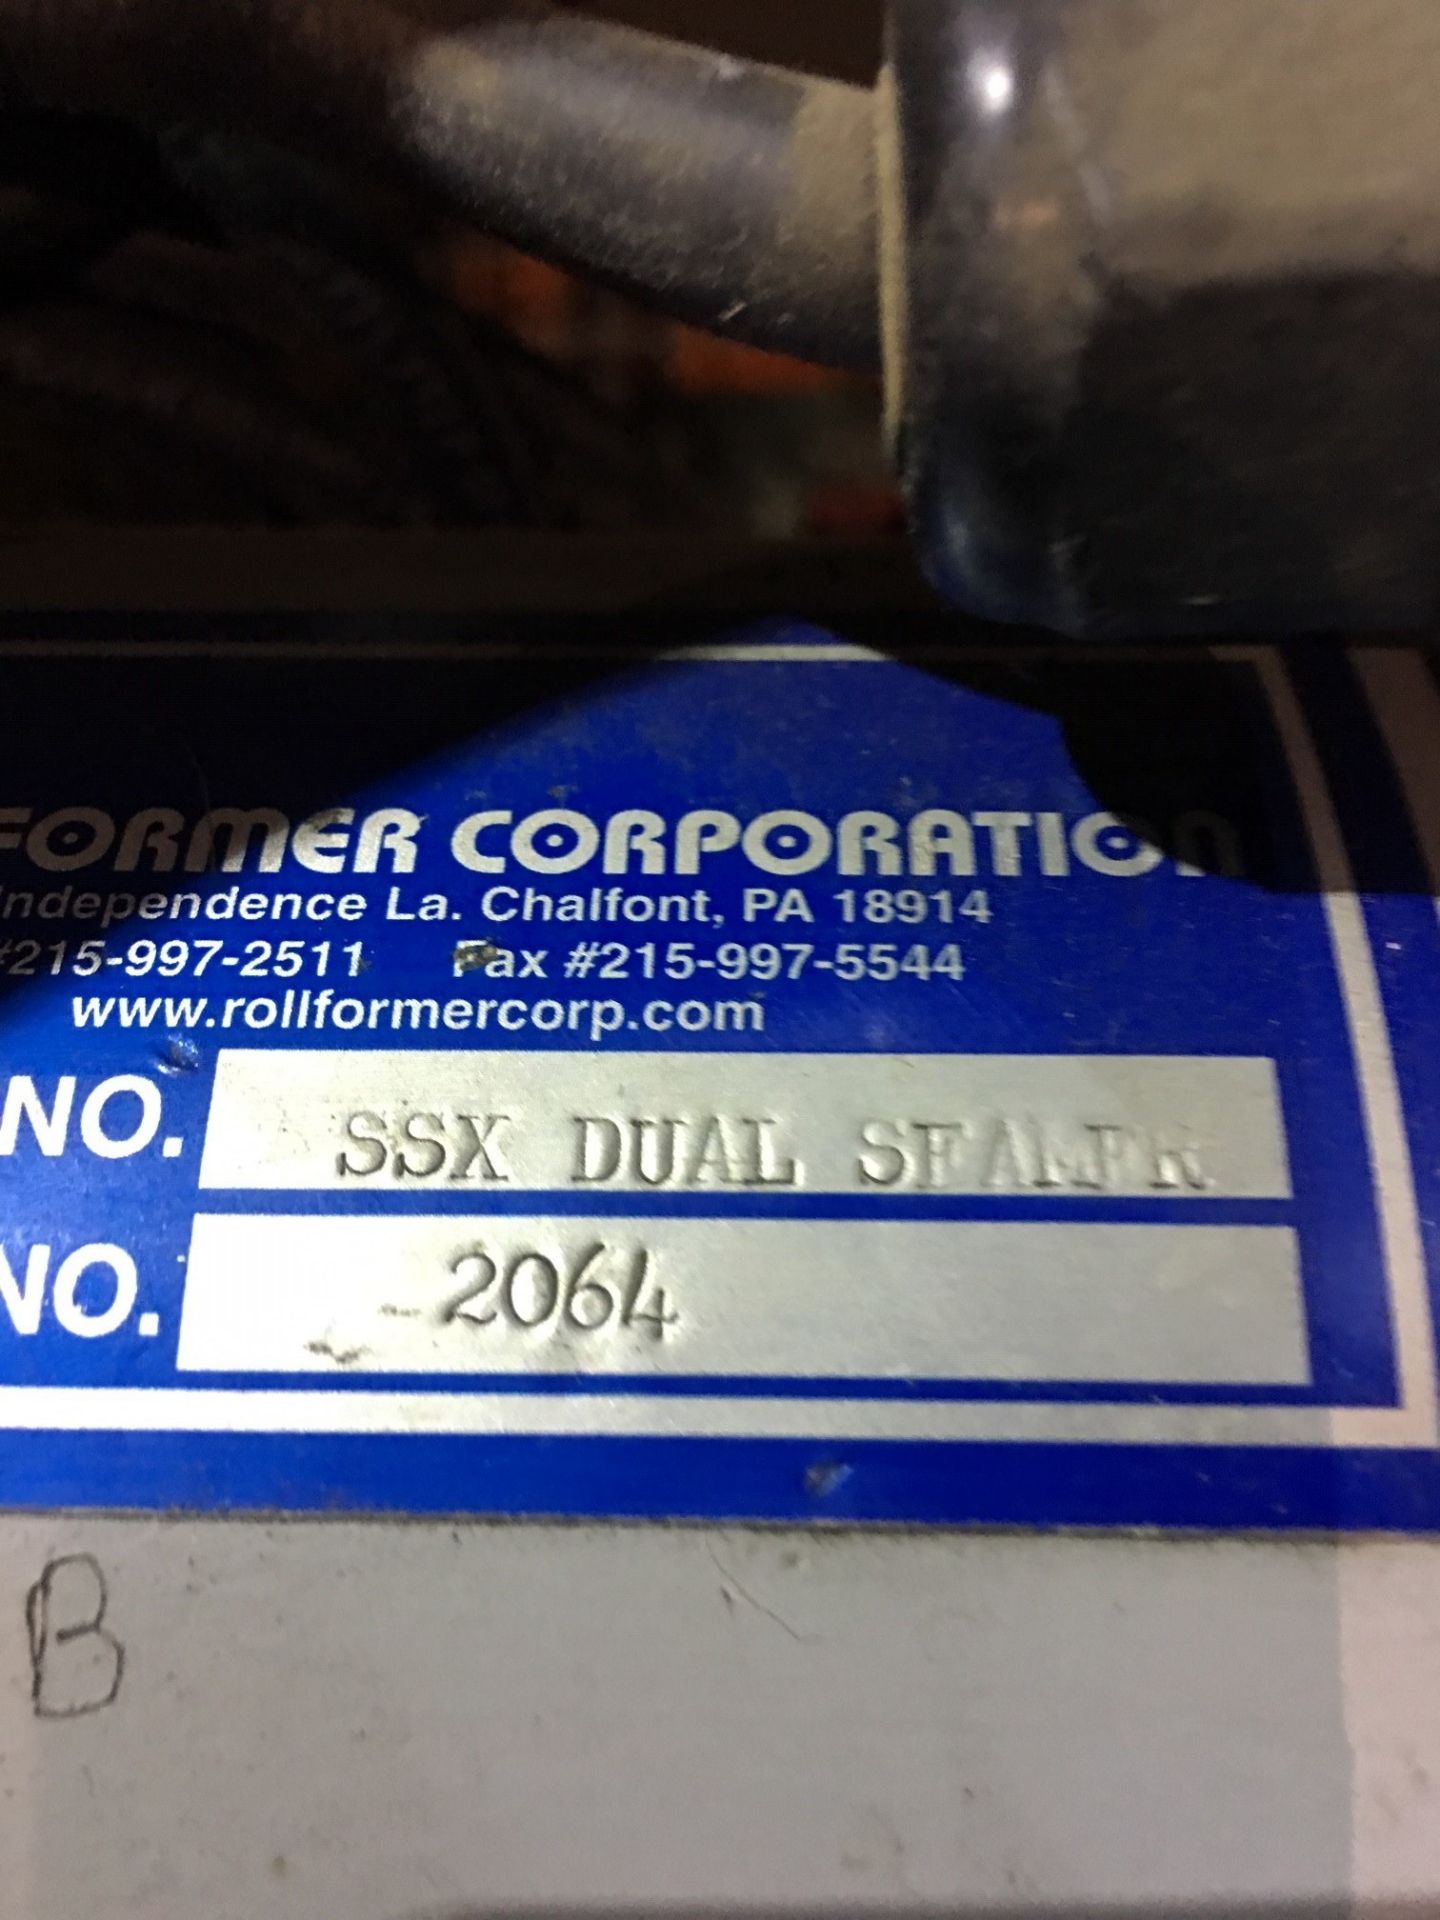 Roll Former Corp. Heavy Duty Portable Seamer, 24 Ga., Mdl: SSX Dual Seamer, S/N: 2064 (7052P) ( - Image 5 of 6